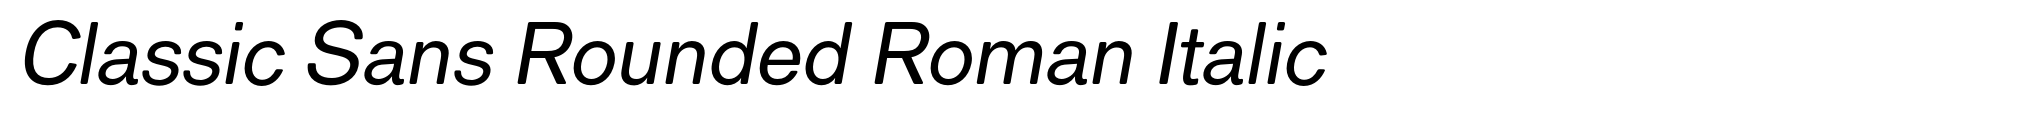 Classic Sans Rounded Roman Italic image